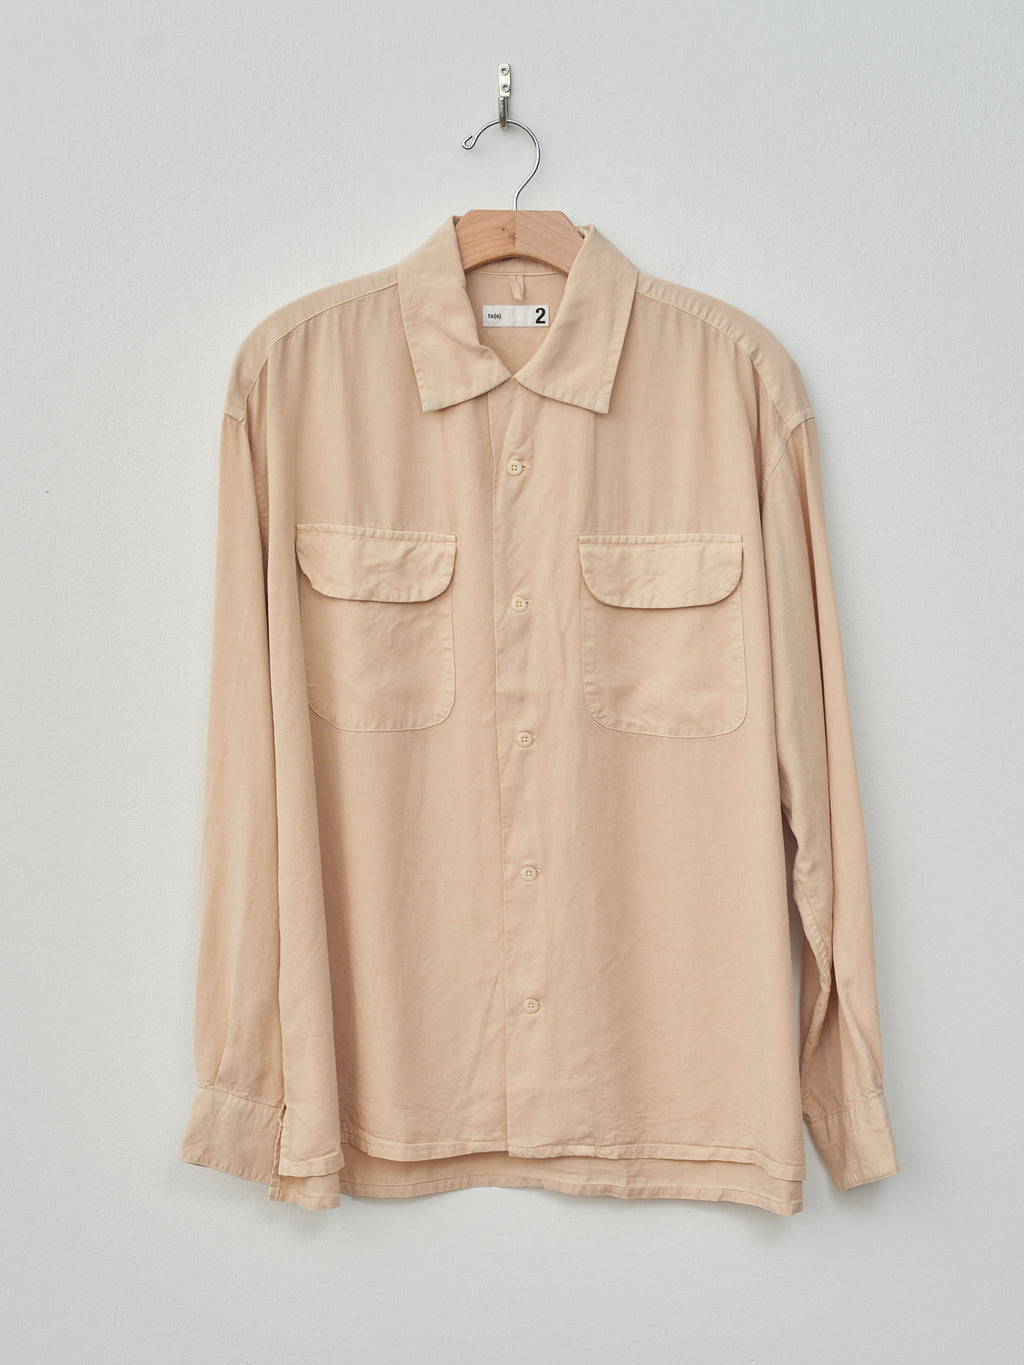 Namu Shop - ts(s) Garment Dye Round Flap Pocket Shirt - Cream